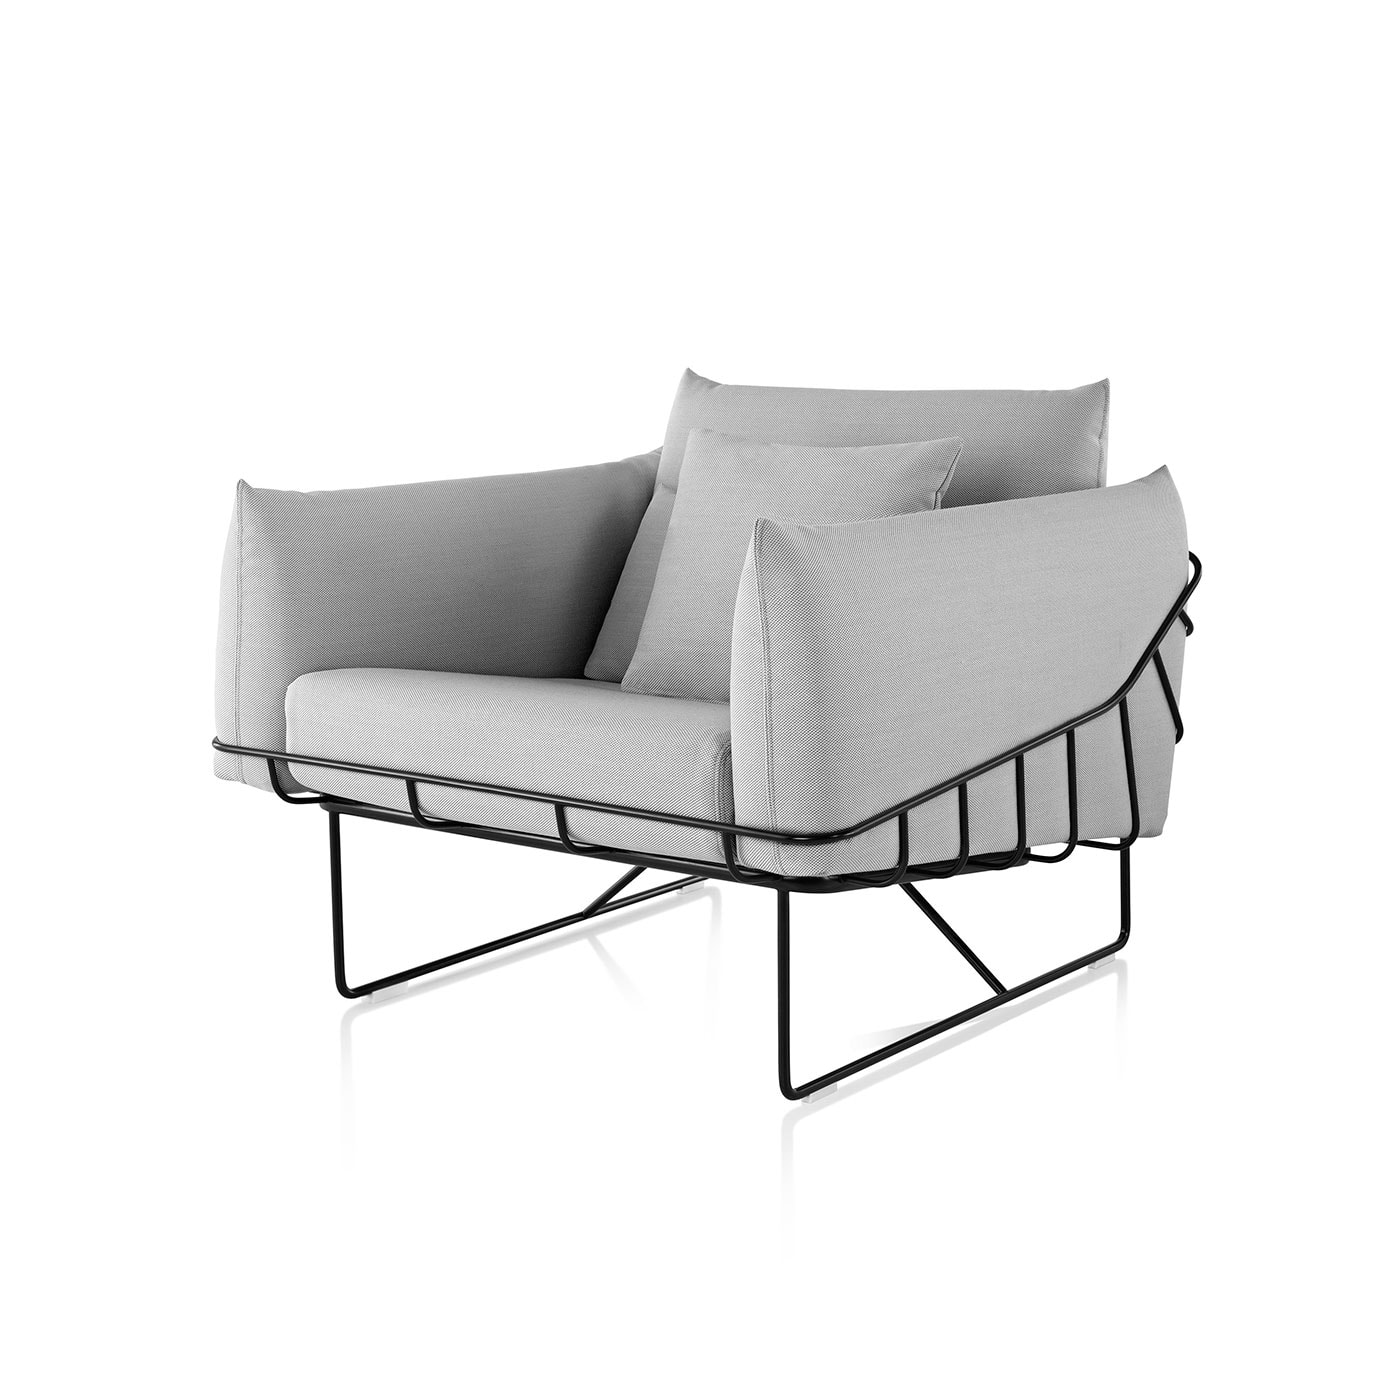 Wireframe Sofa: poltrona o divano